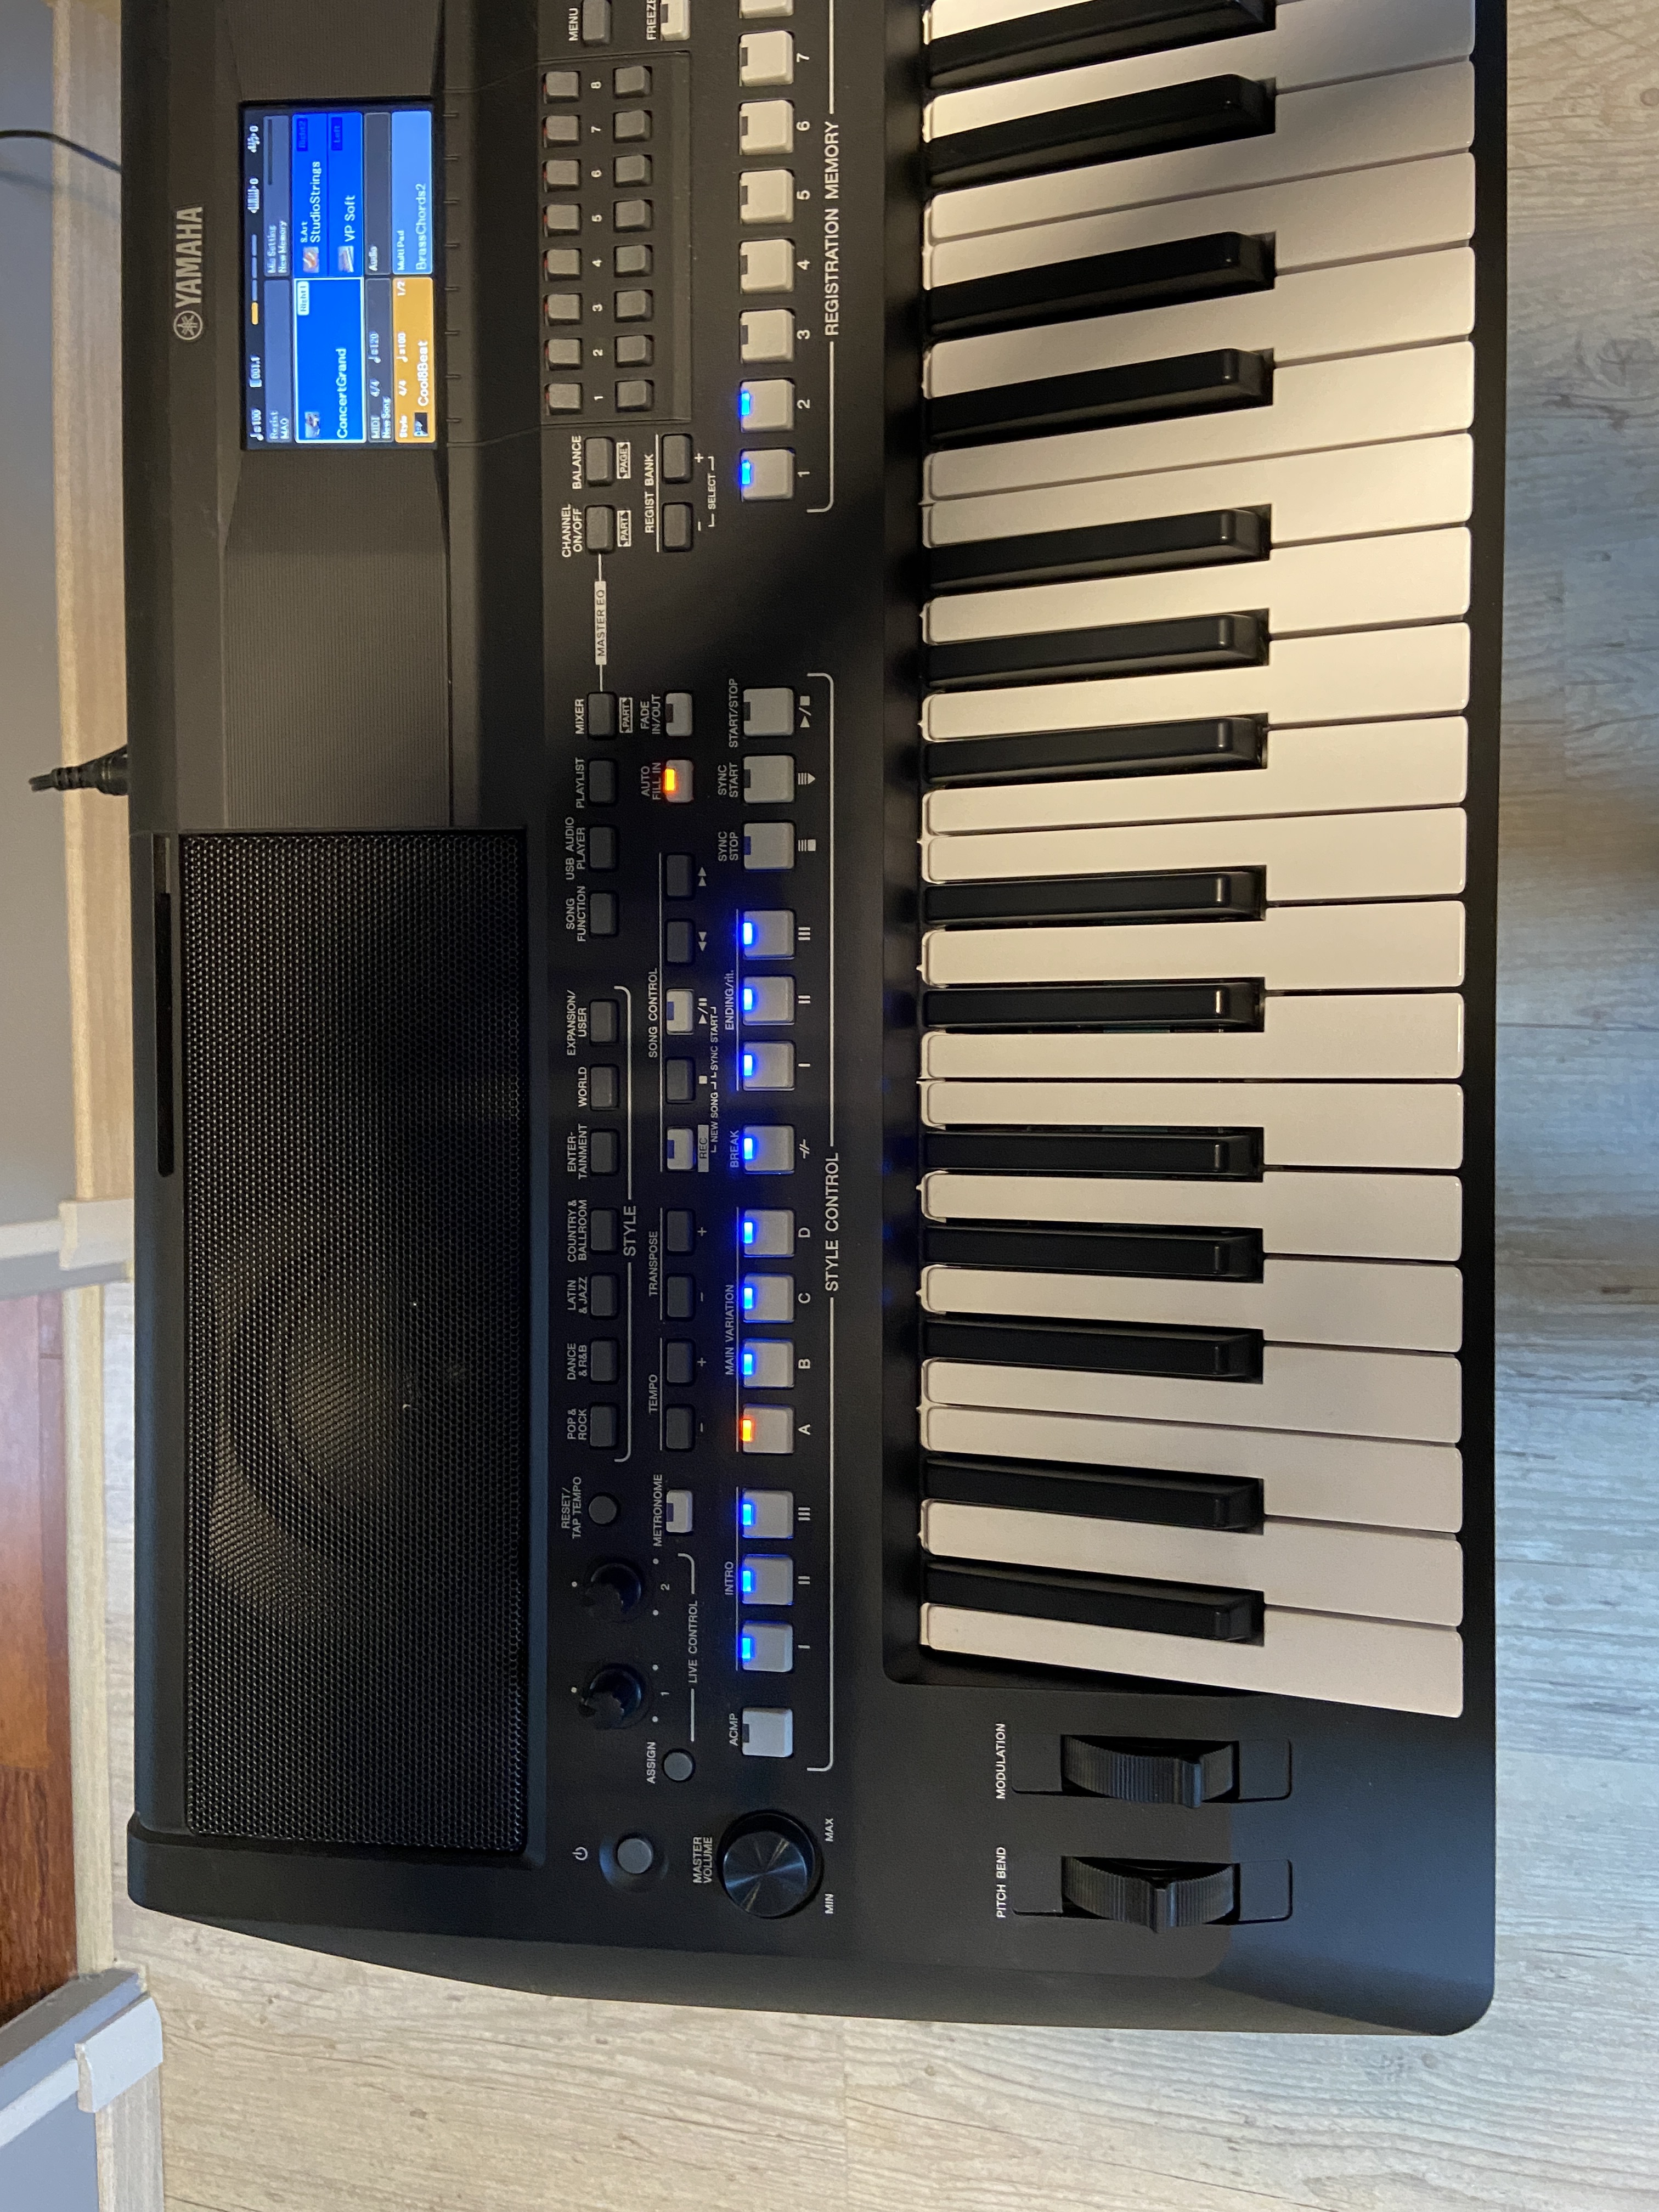 Yamaha PSR-SX600 - Sud Claviers